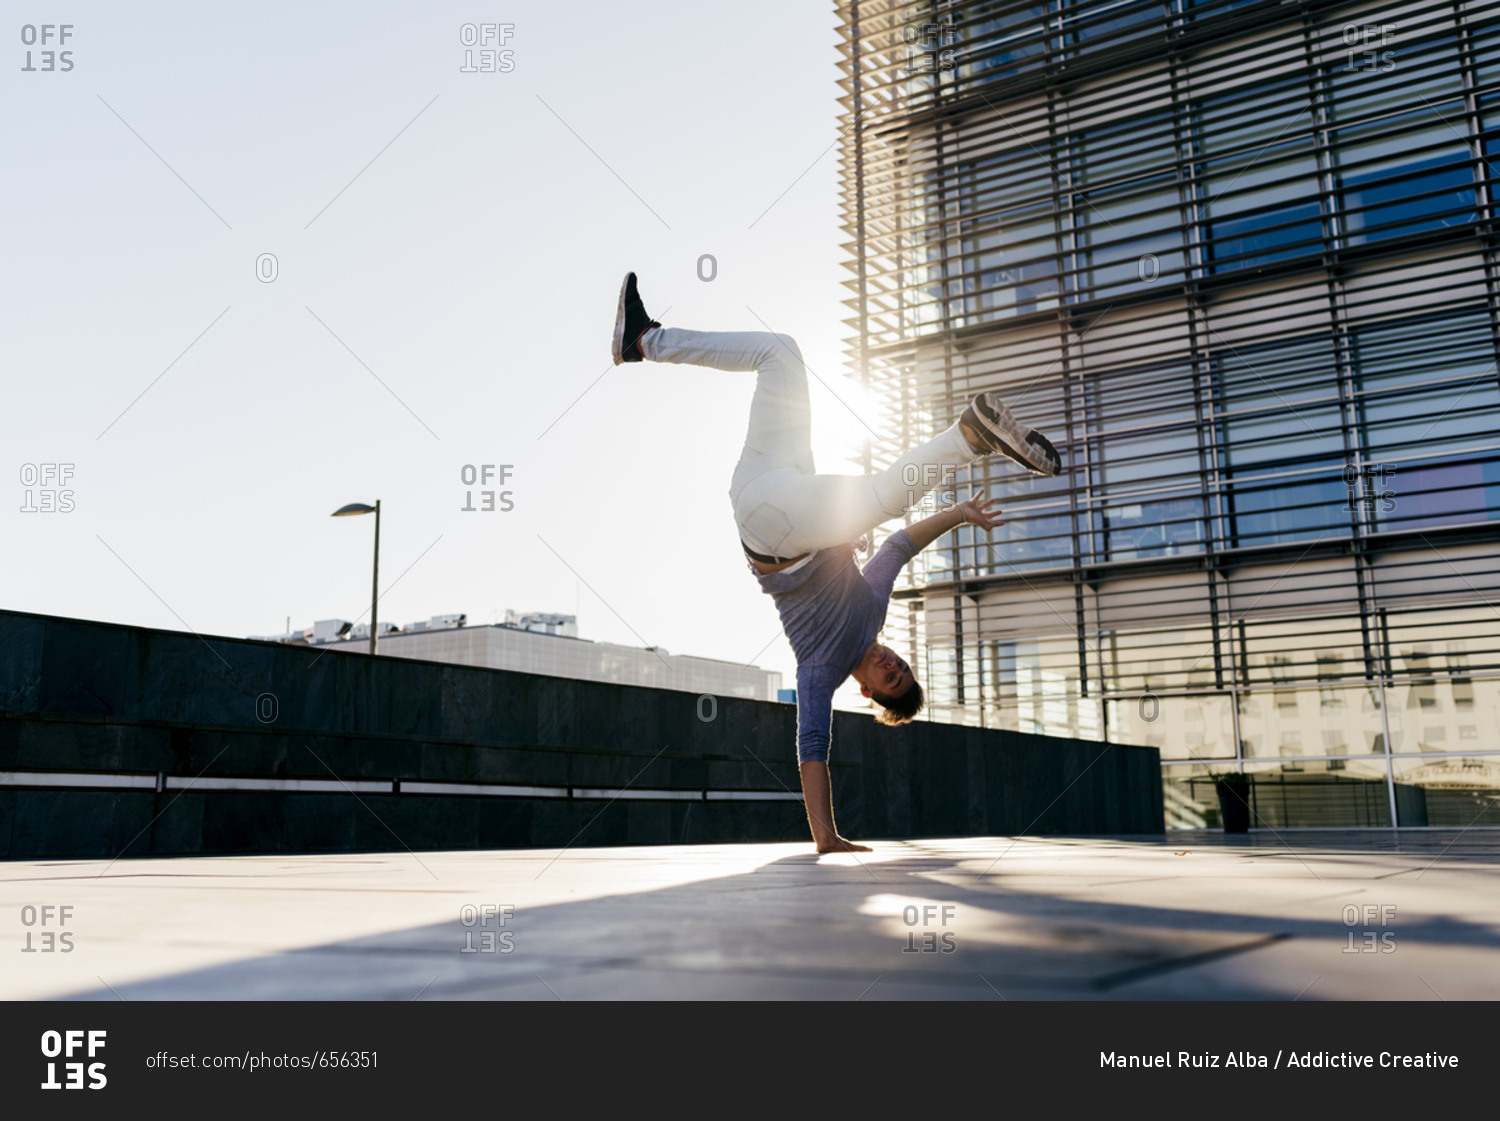 Man performing trick on street